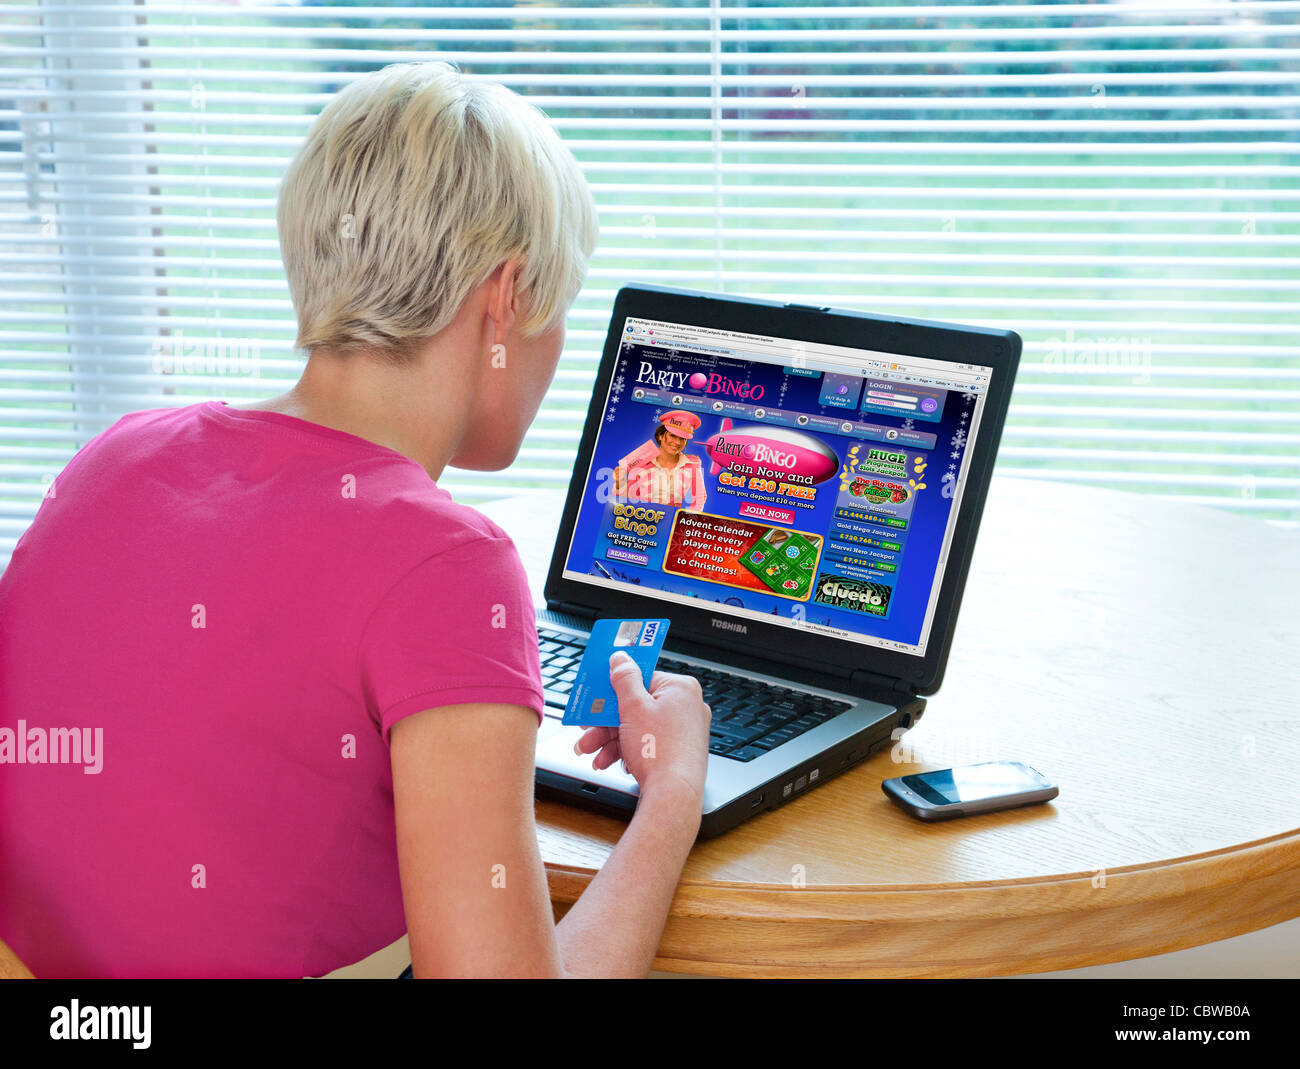 woman playing online bingo games on PartyBingo website Stock Photo